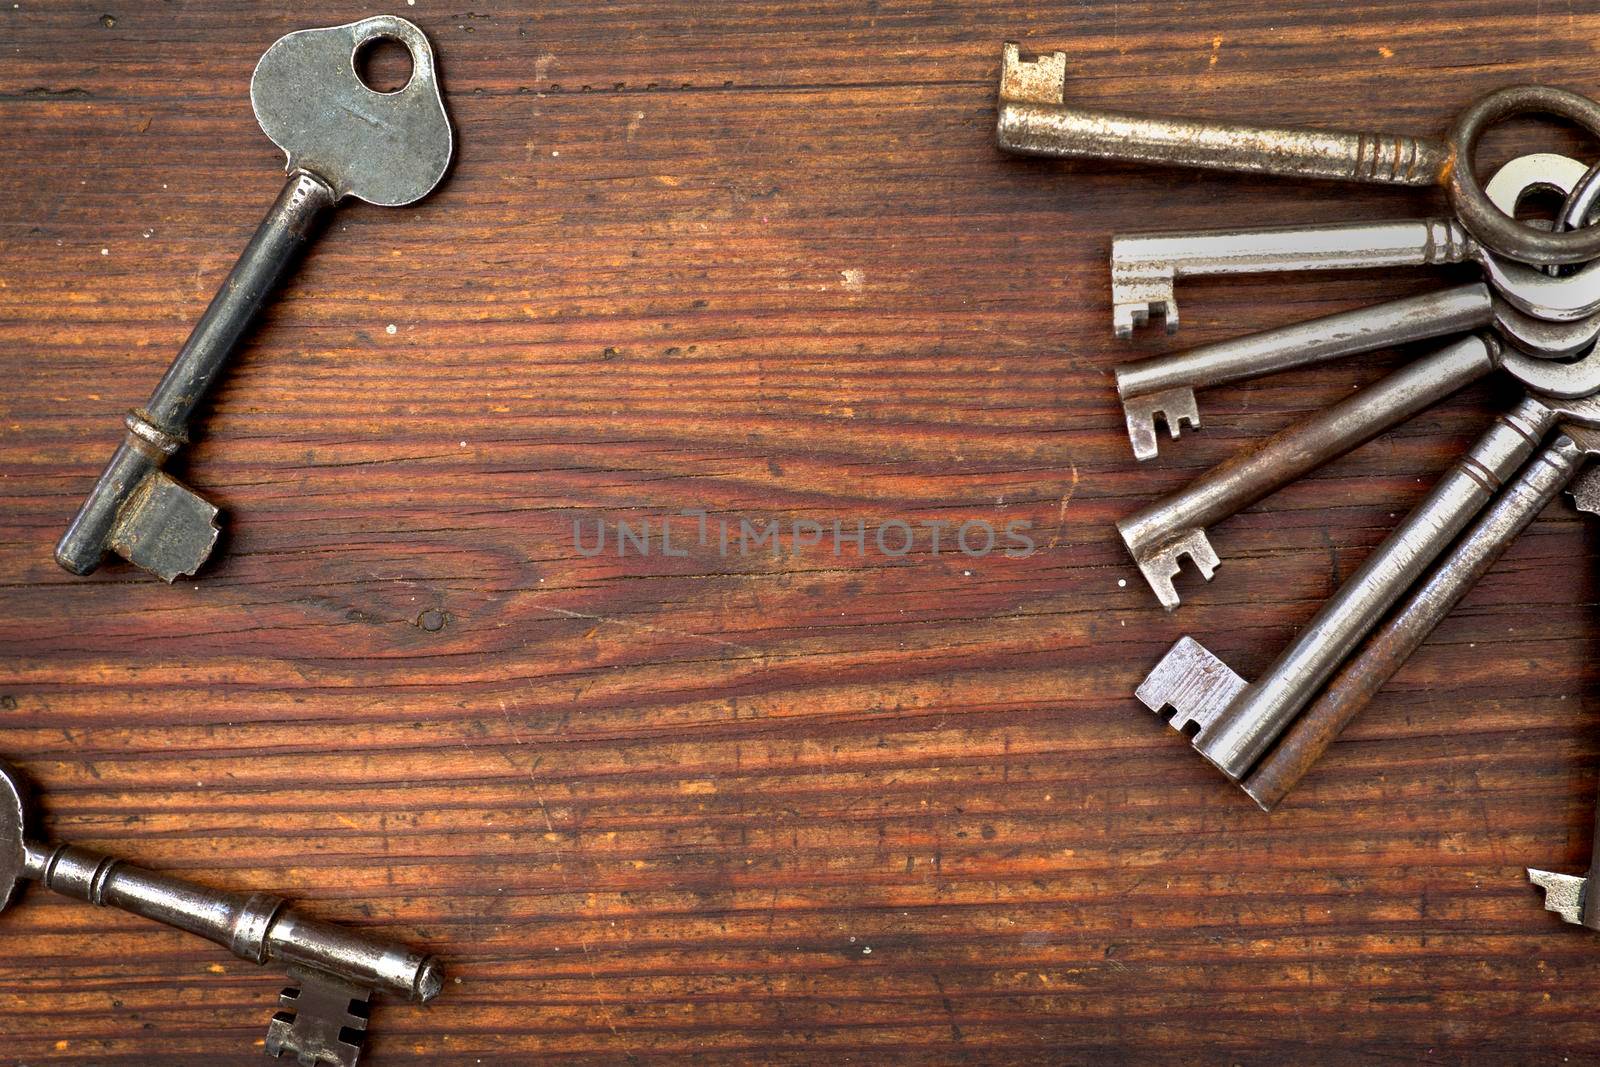 Old keys arranged on wood, flat lay